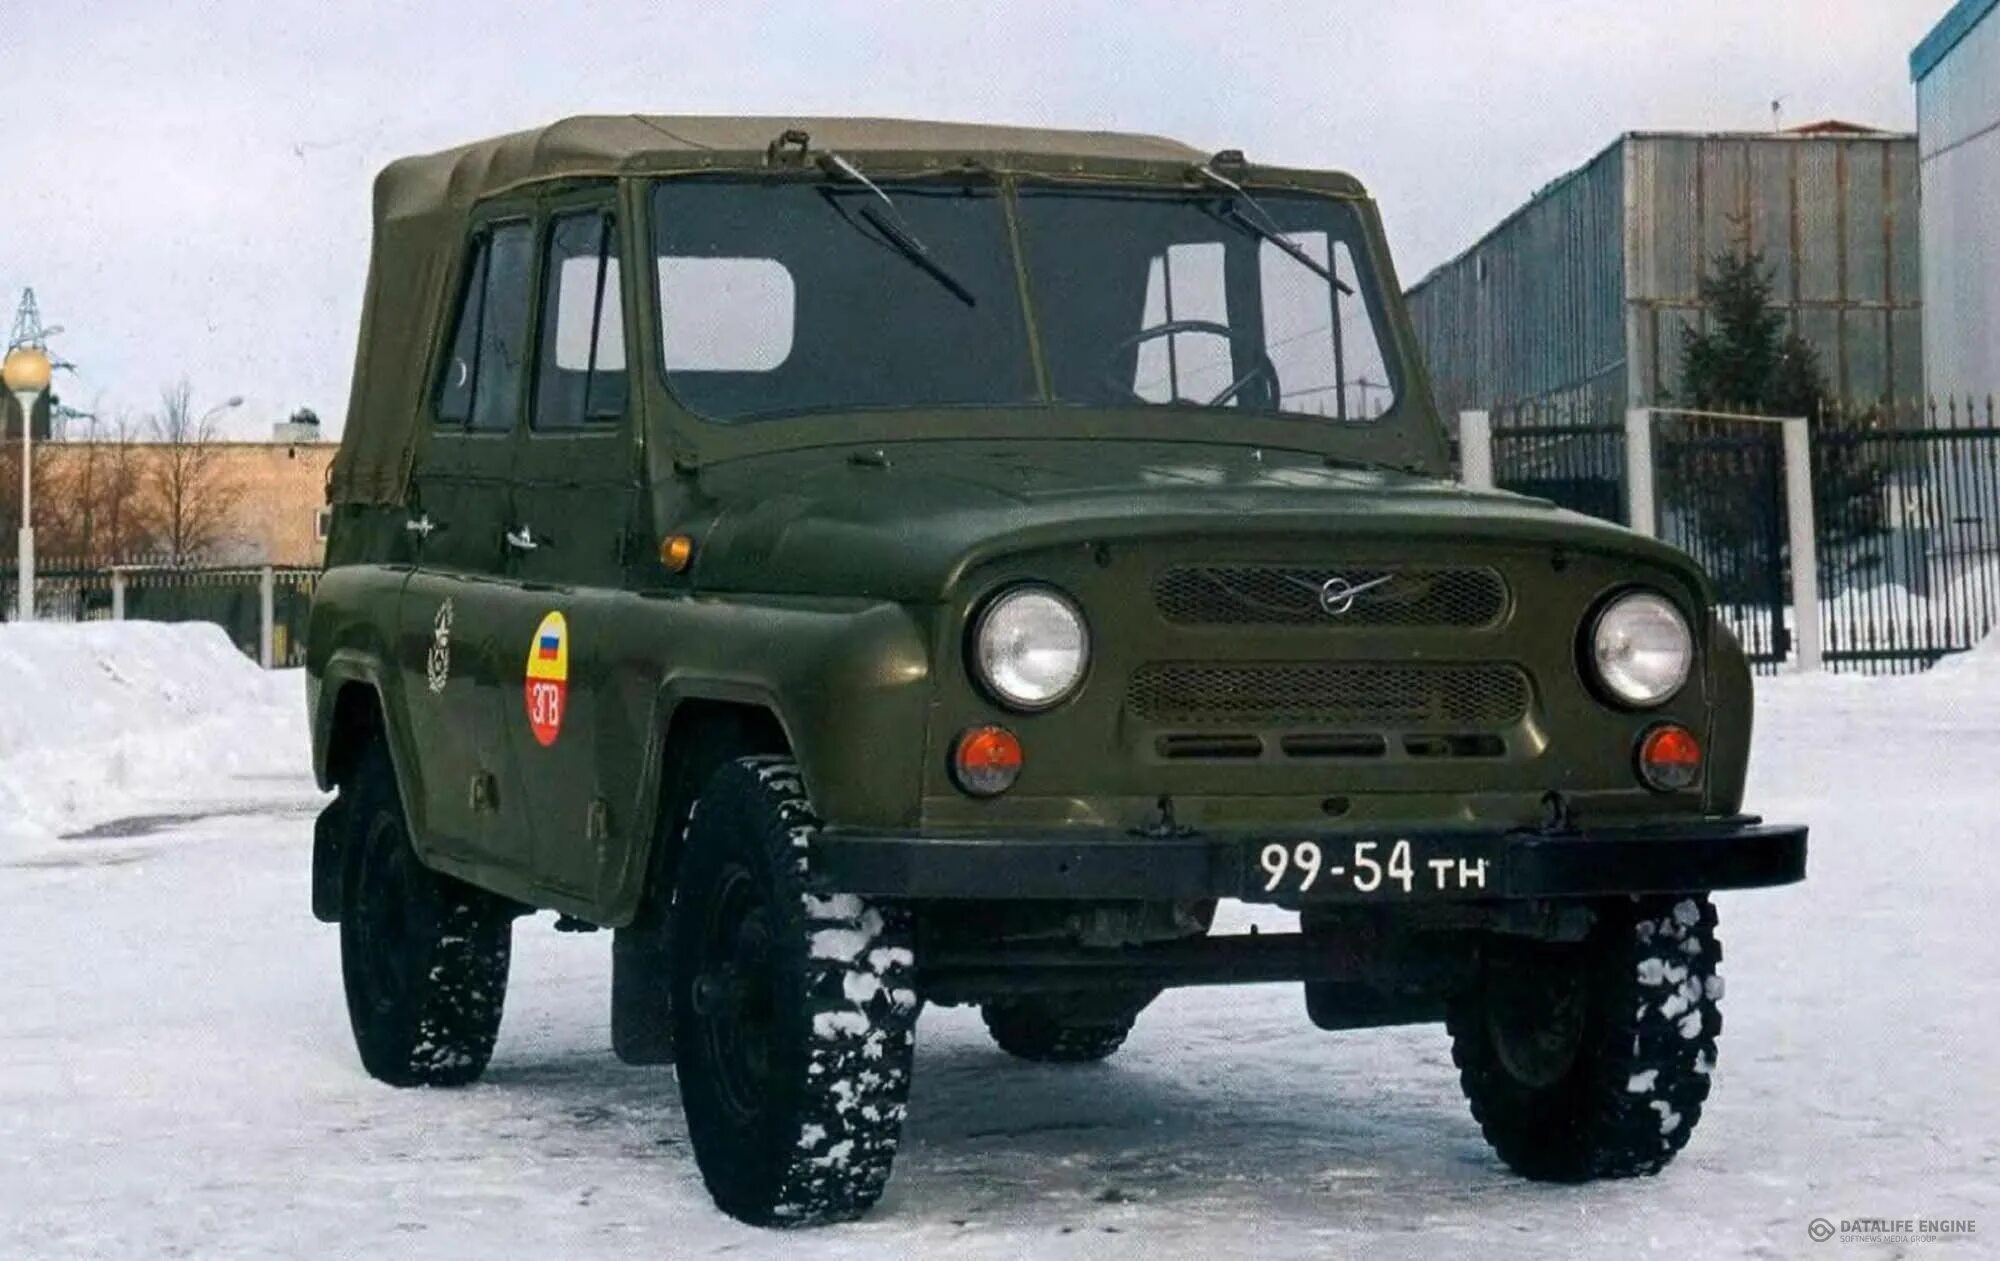 Уаз 469 г. УАЗ-469 внедорожник военный. УАЗ 469 армейский. УАЗ-469 «козёл». УАЗ 469 В армии.